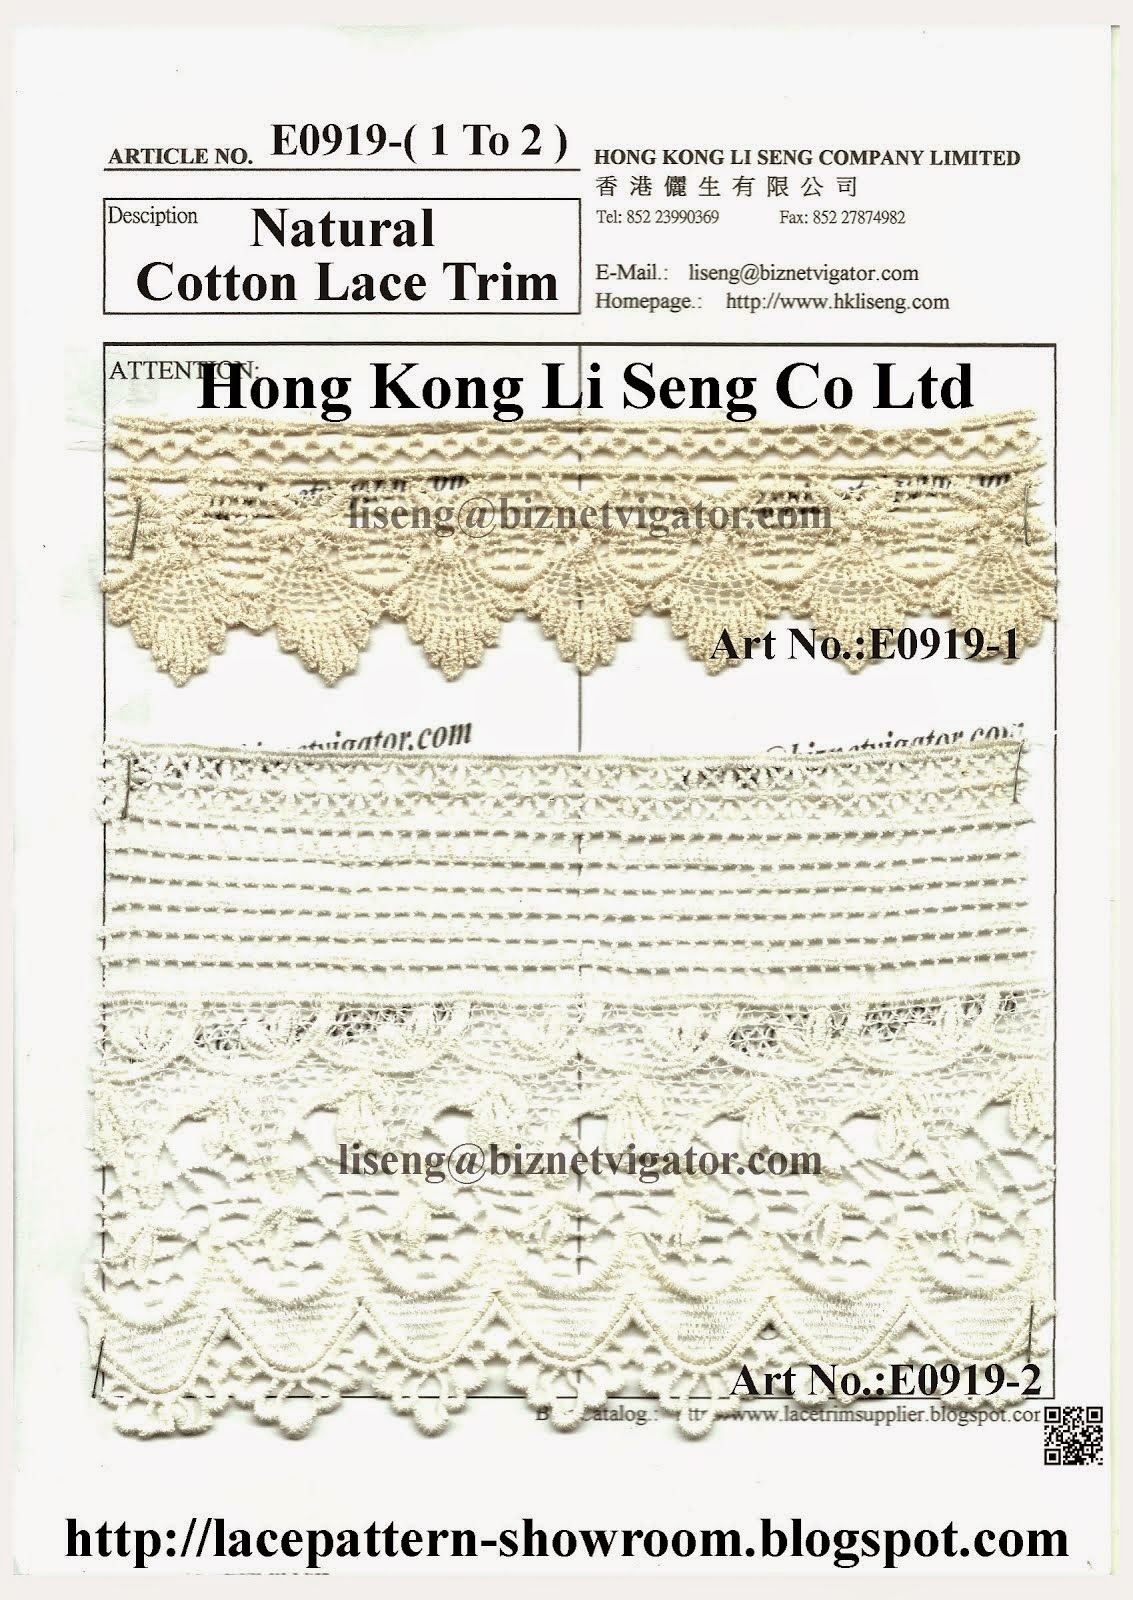 New Natrual Cotton Lace Trim Manufacturer Wholesaler Supplier - Hong Kong Li Seng Co Ltd